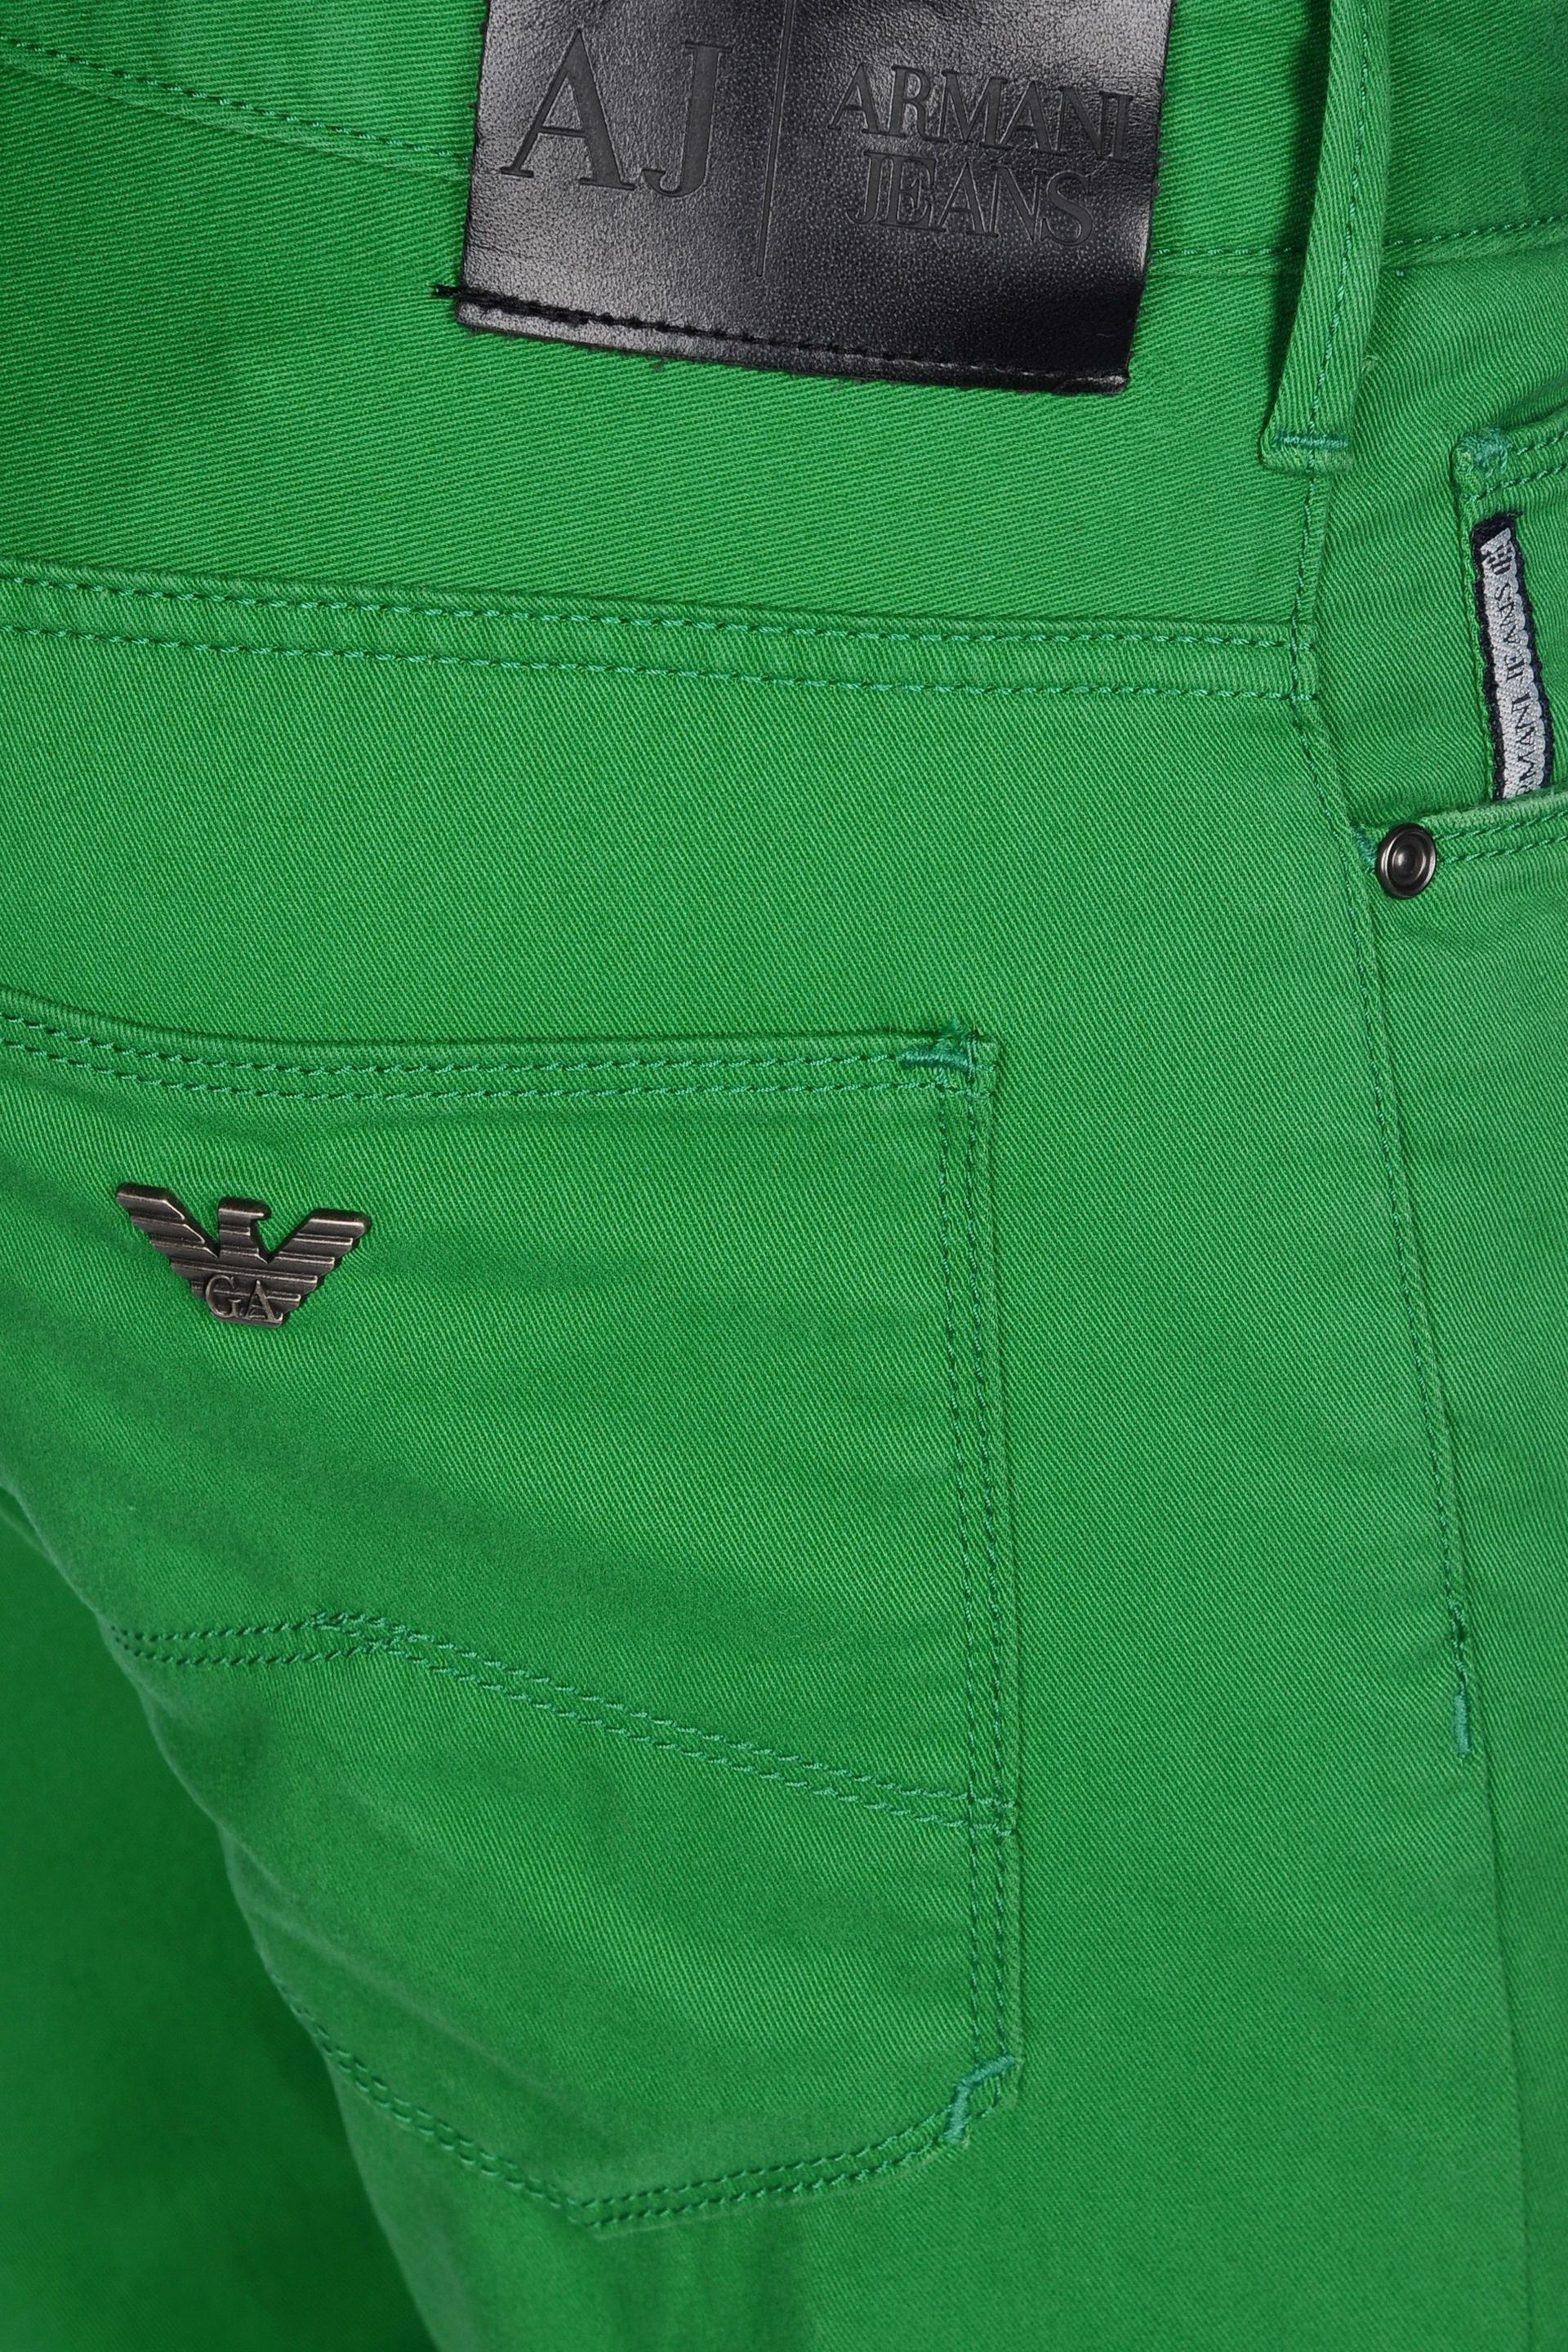 green armani jeans - 52% OFF 